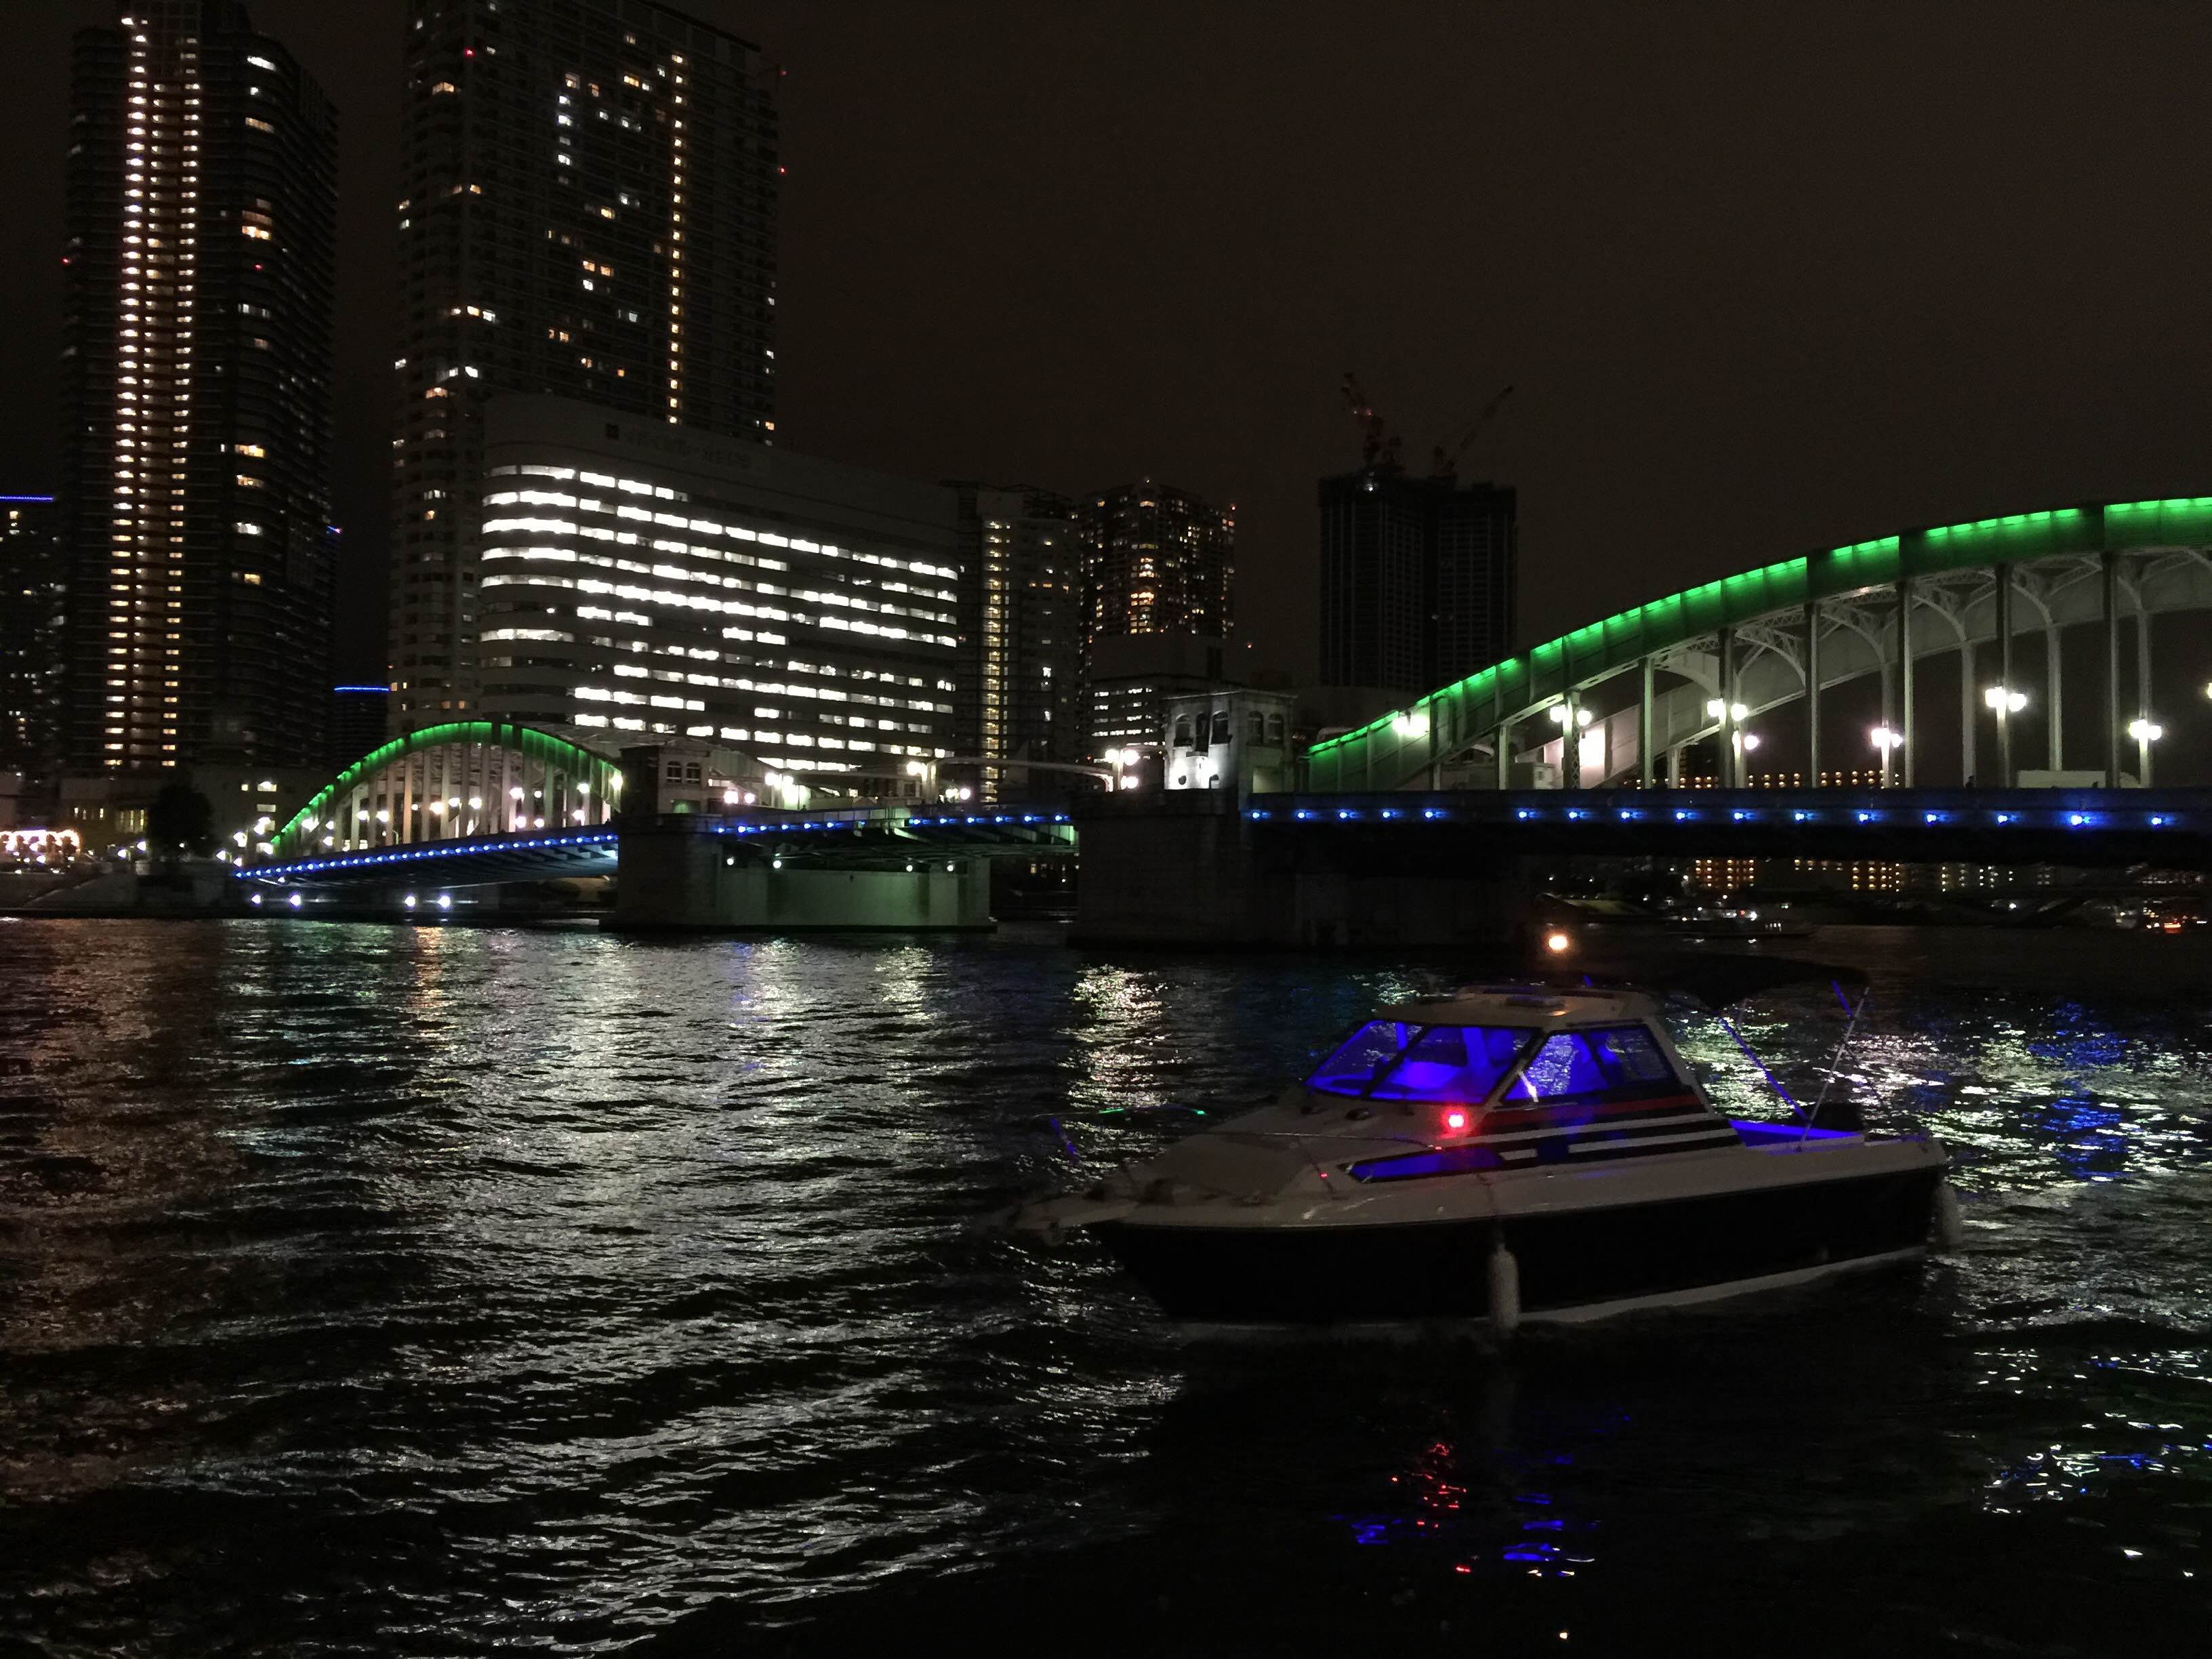 LEDで装飾された小型船とライトアップされた夜の橋